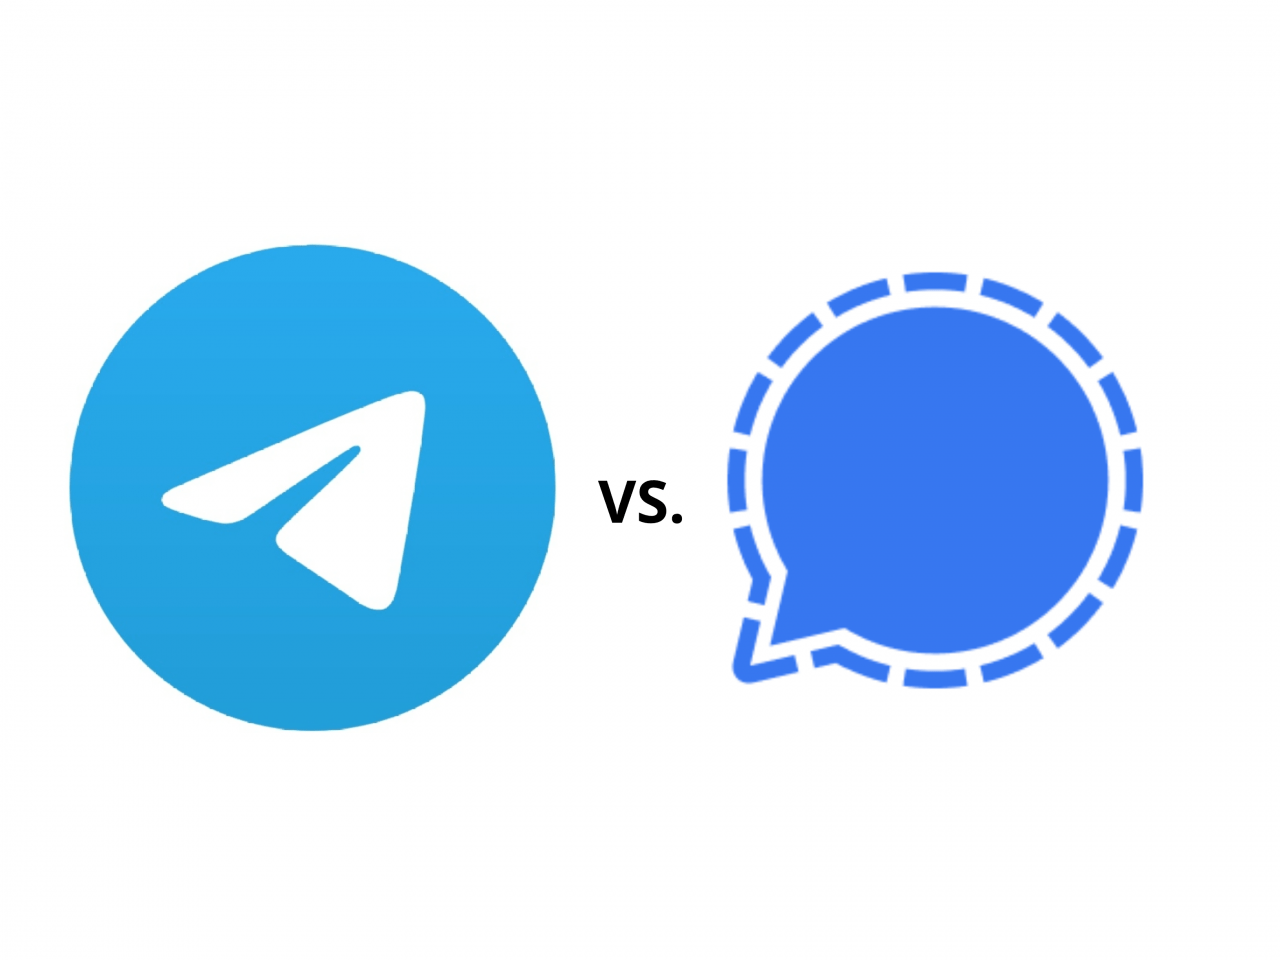 security signal vs telegram